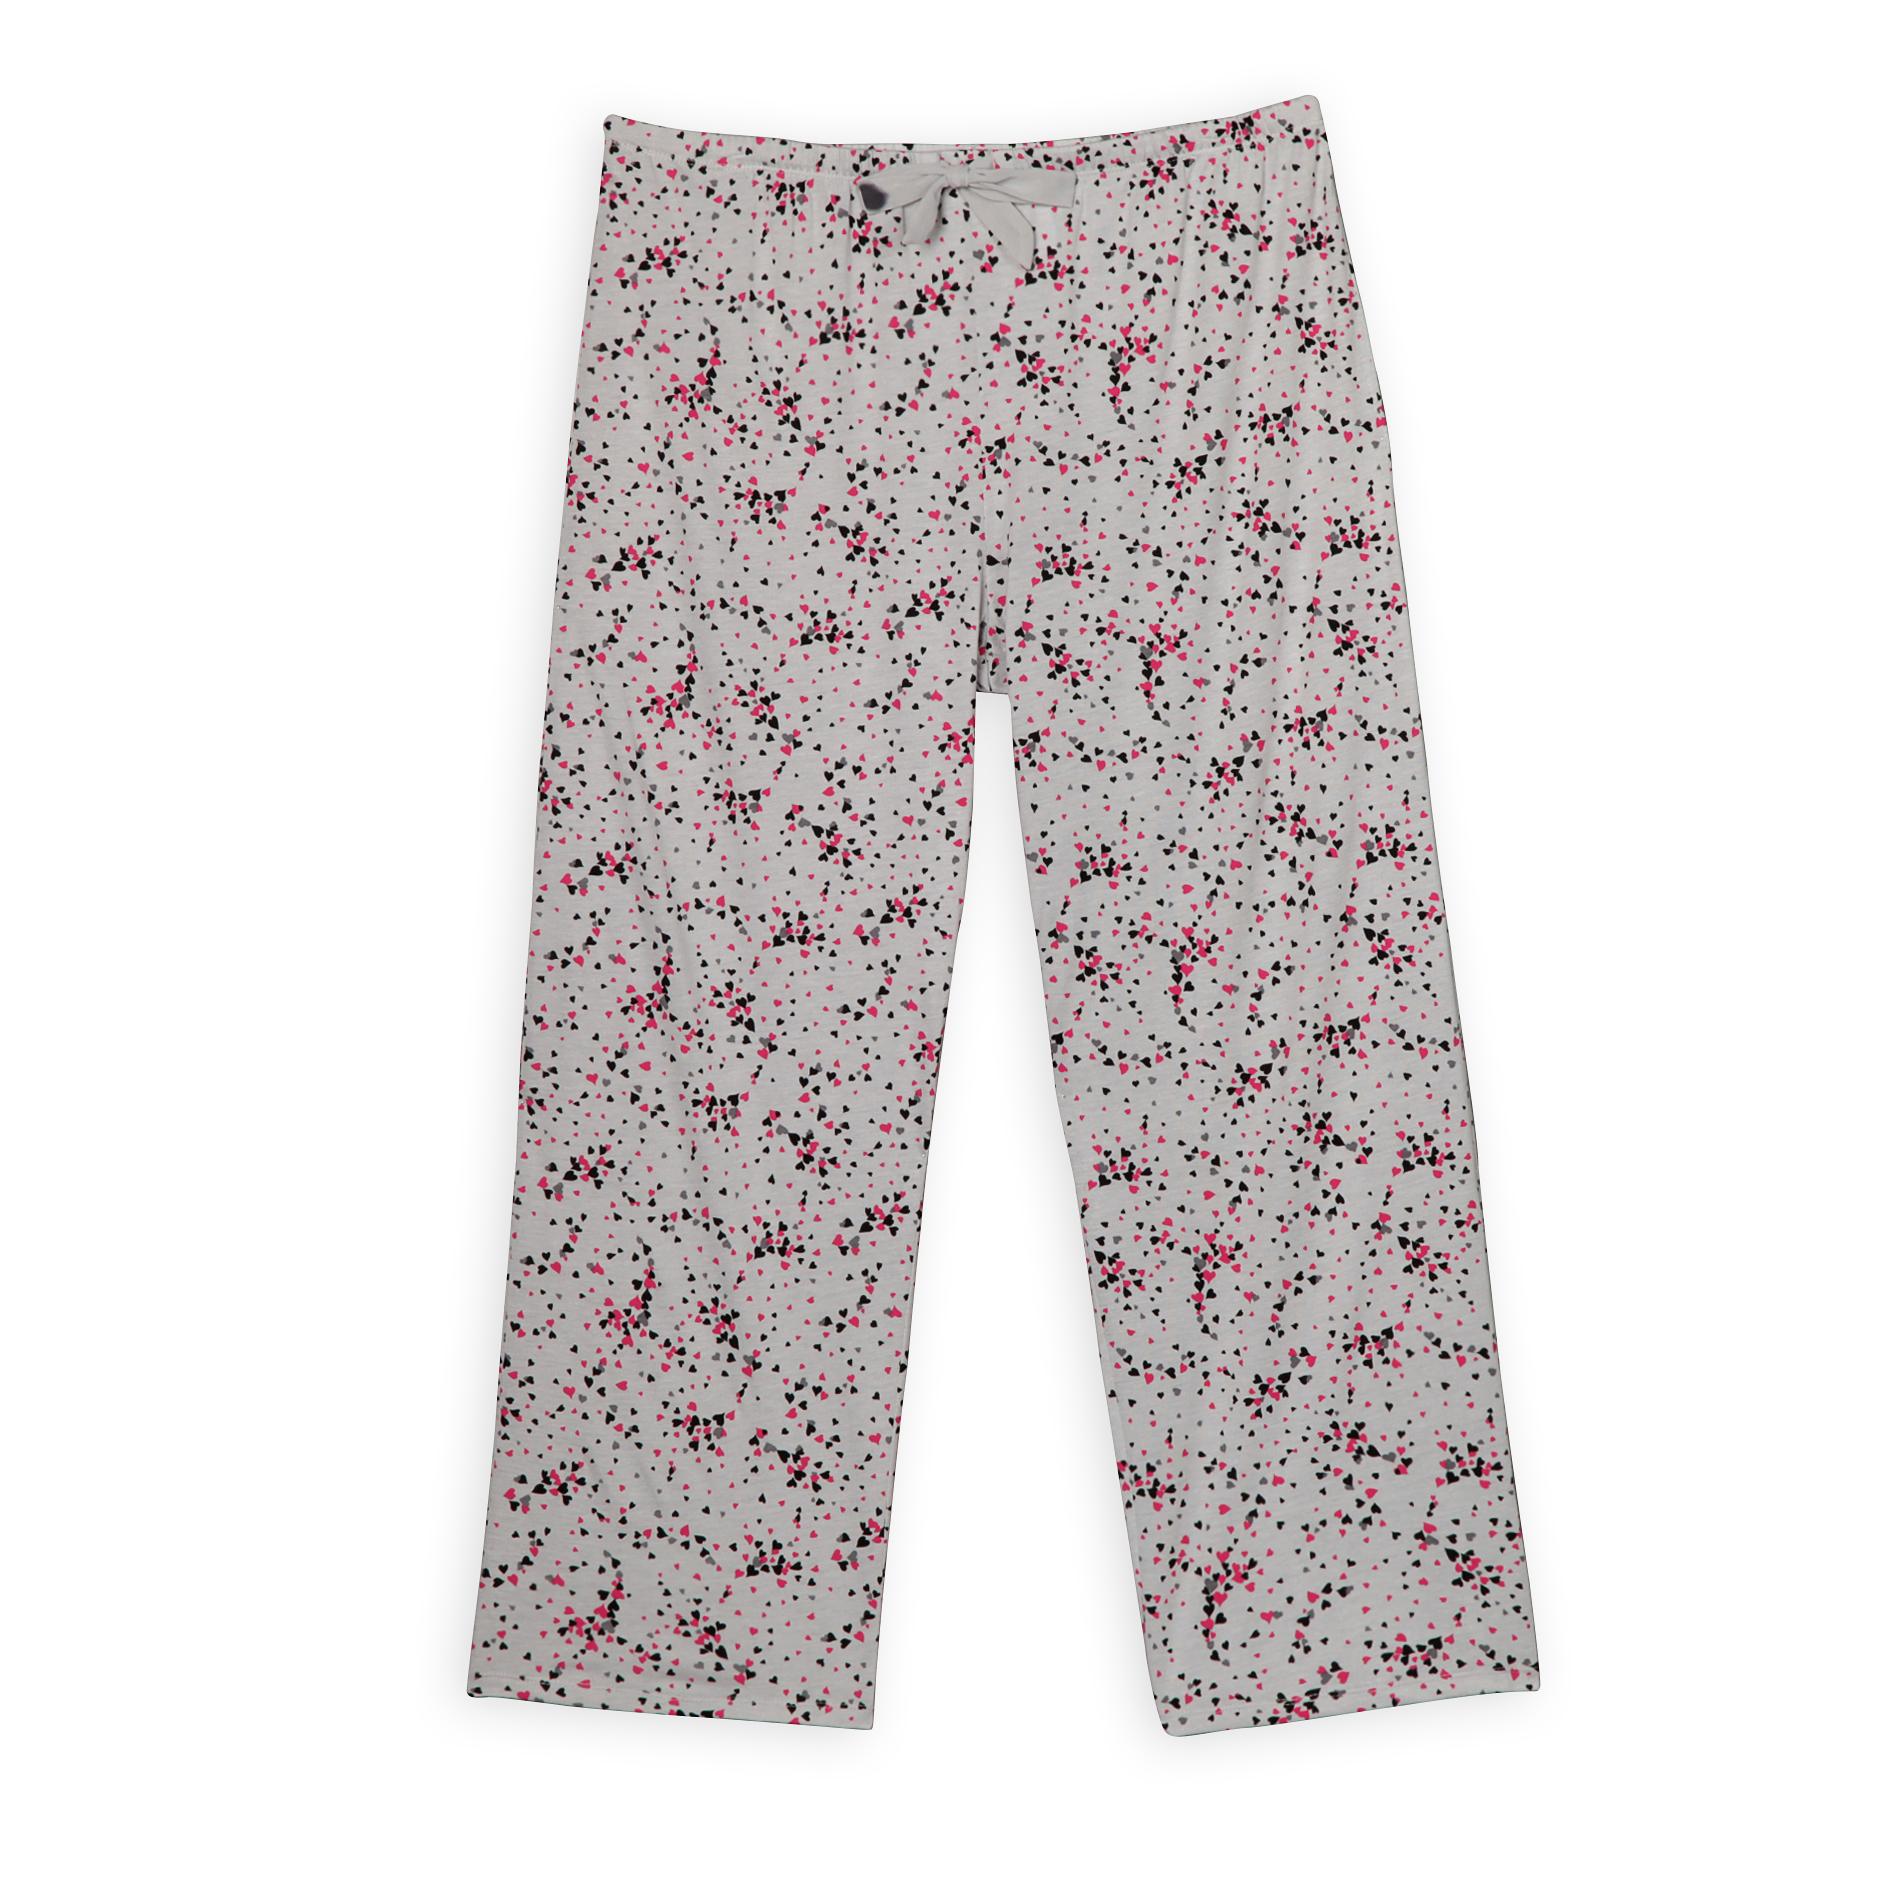 Jaclyn Intimates Women's Knit Pajama Pants - Polka Dot